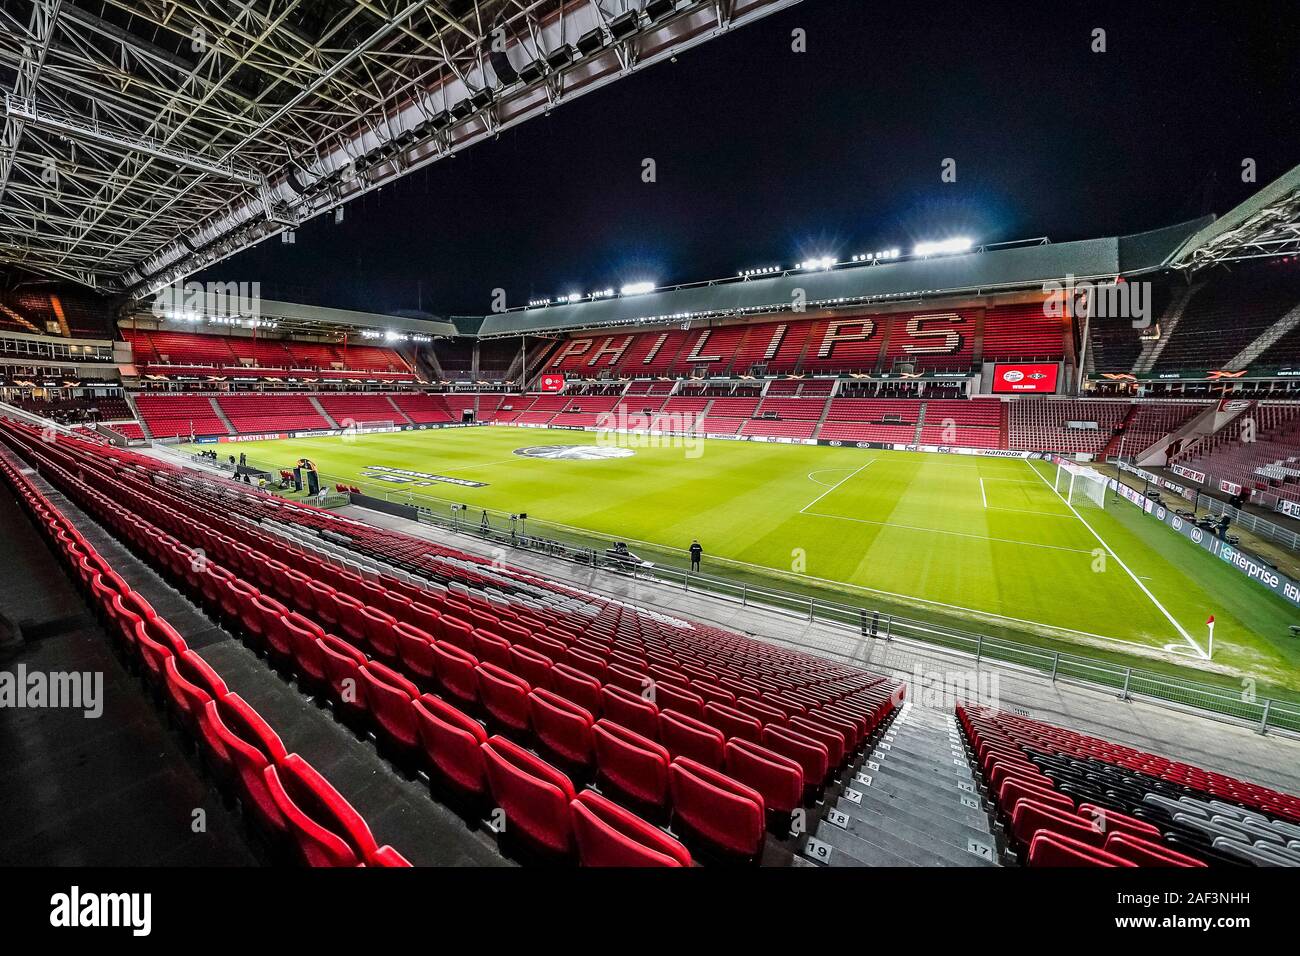 EINDHOVEN, PSV - Rosenborg BK, 12-12-2019, calcio, stagione 2019-2020, Europa League Group Stage, Philips Stadium, panoramica dello stadio Foto Stock